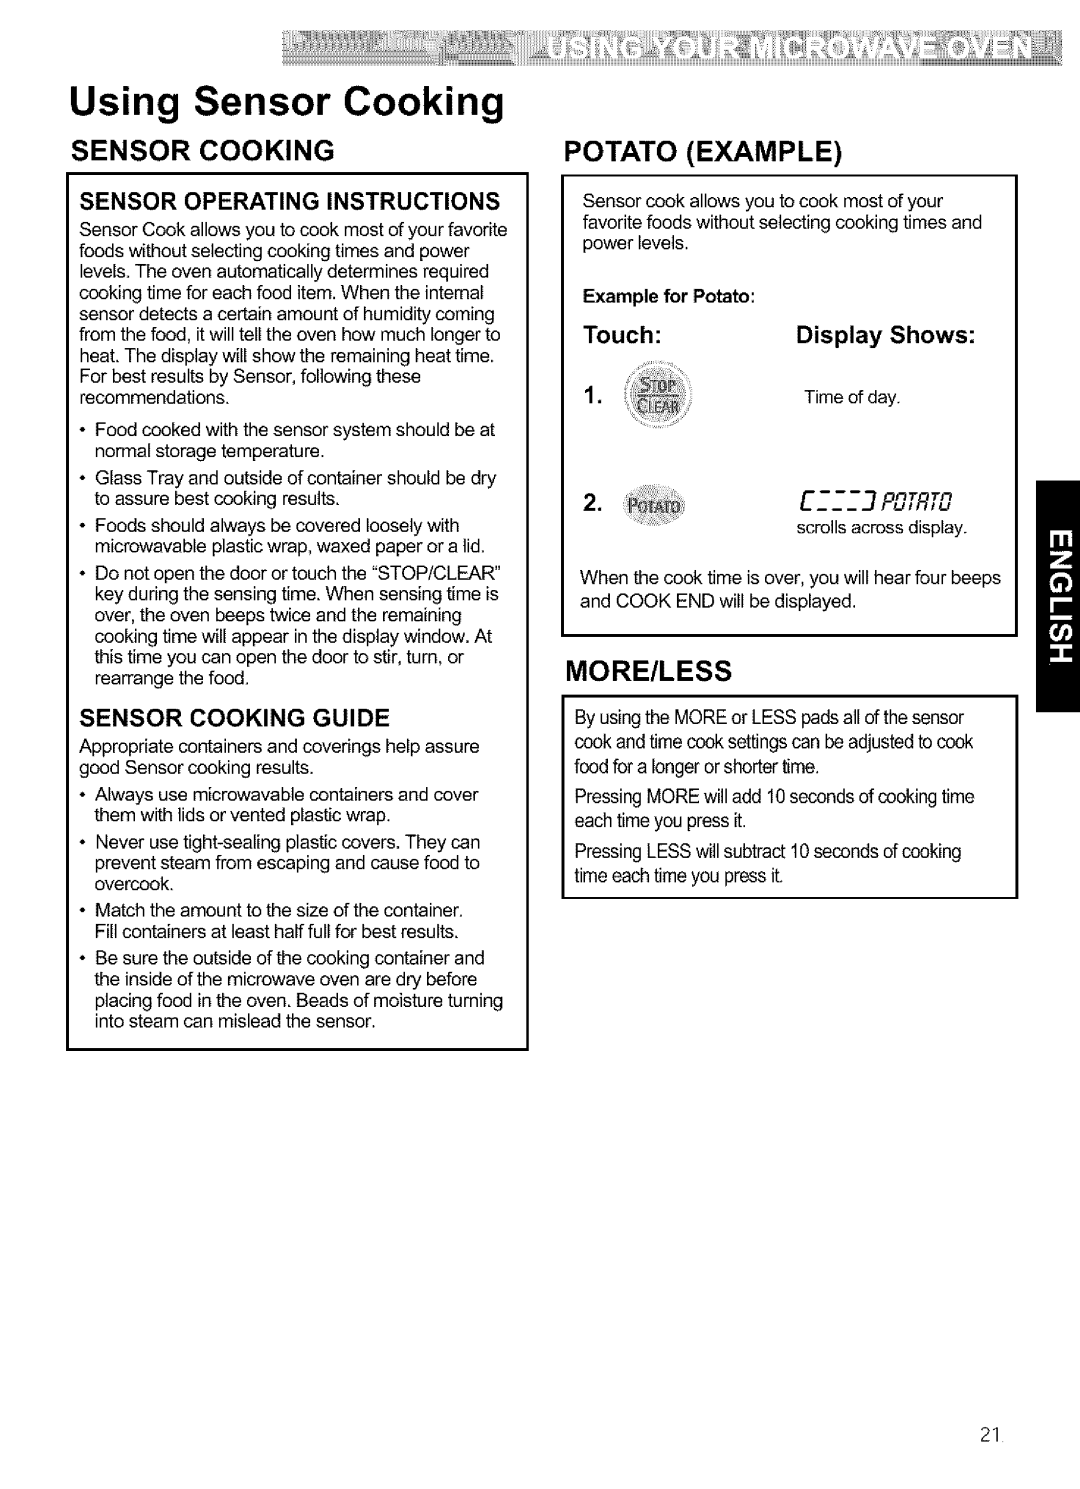 Kenmore 721.64684 Using Sensor Cooking, Potato Example, More/Less, Sensor Operating Instructions, Sensor Cooking Guide 